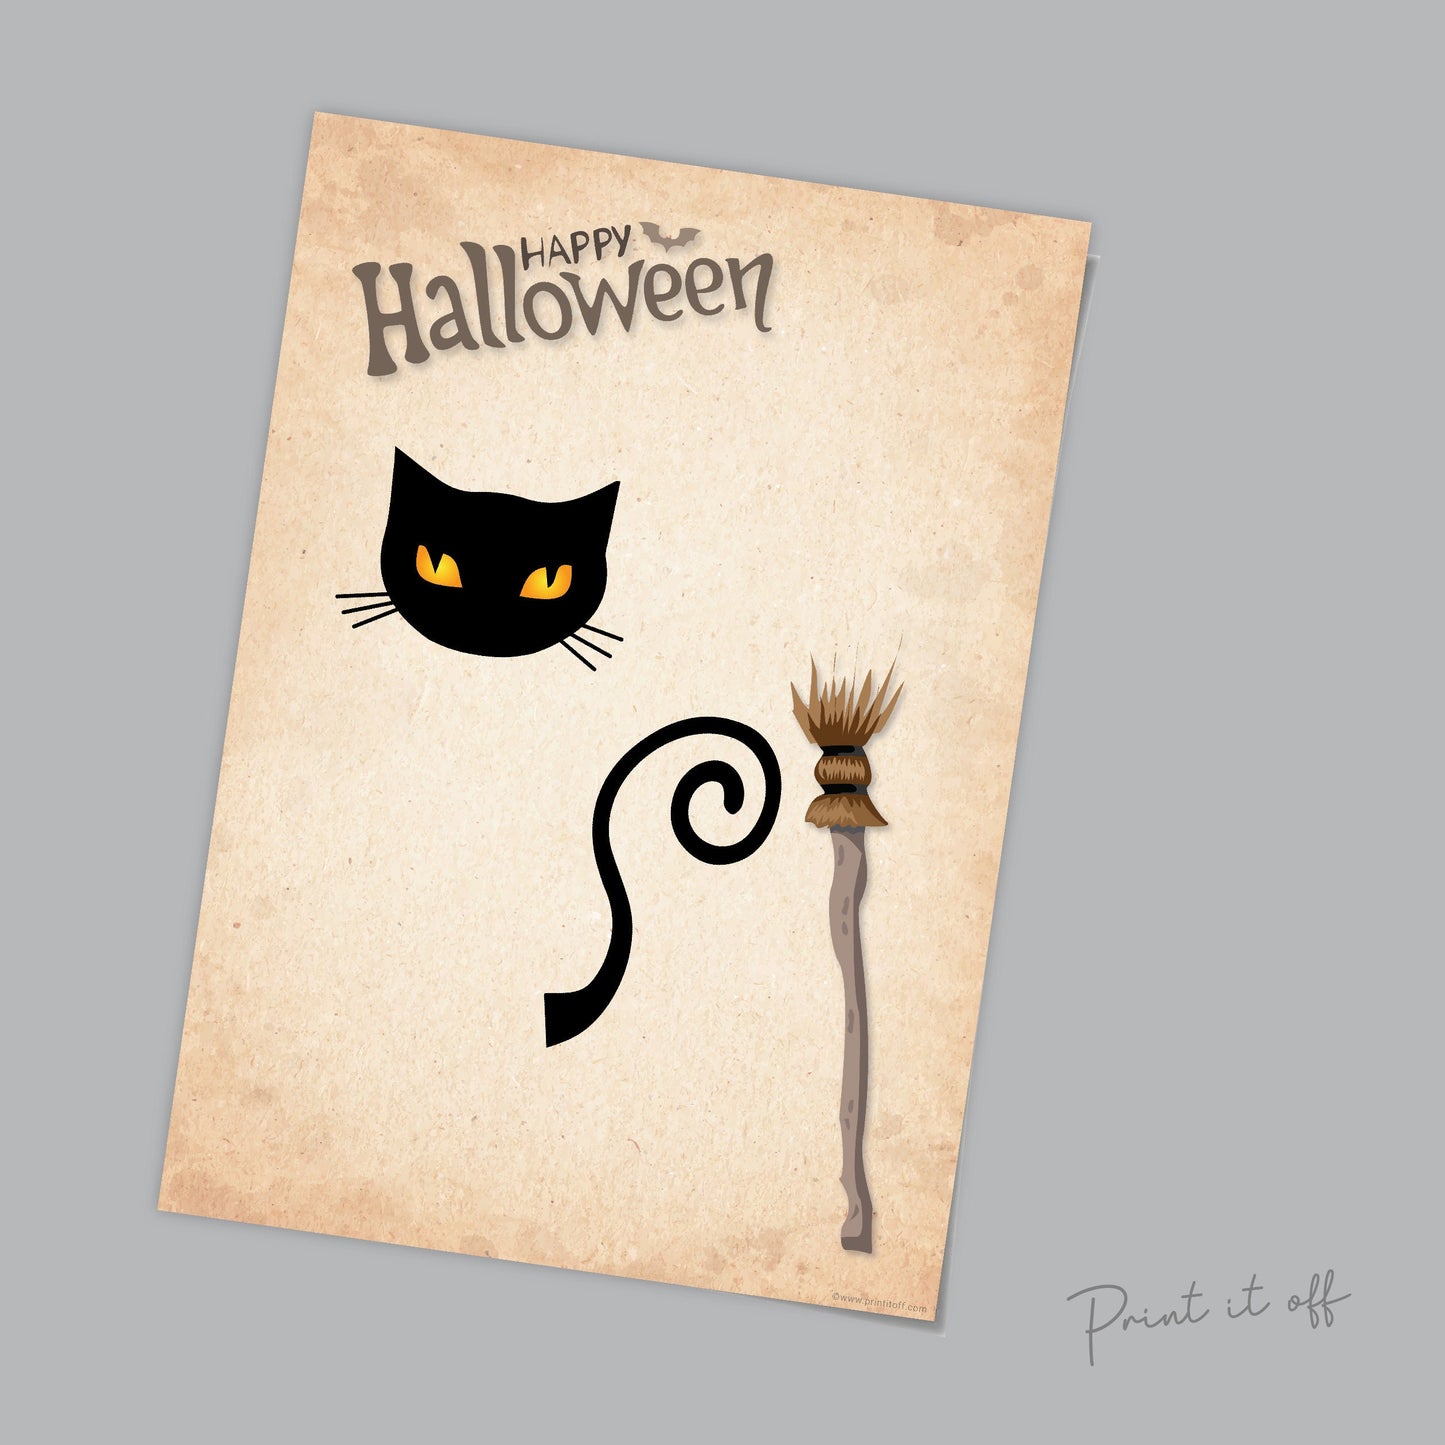 Halloween Footprint Handprint Art Craft / Black Cat Witch Broom / Kids Toddler Baby Card Memory DIY Activity Keepsake / Print It Off 0589